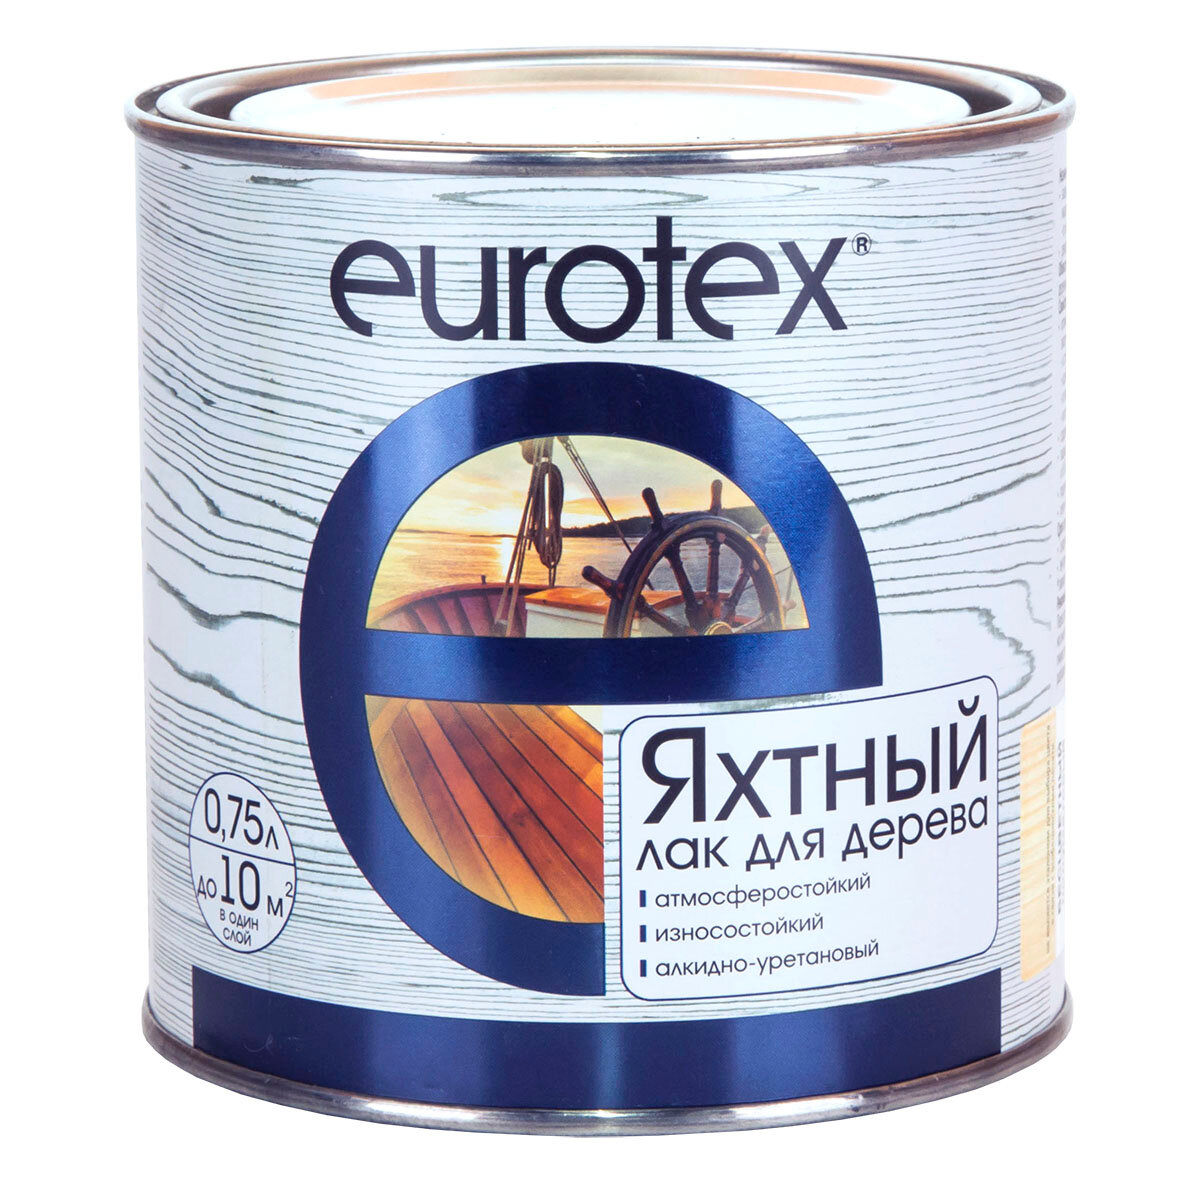 Eurotex лак яхтный алкидно-уретановый глянцевый (0.75 л)